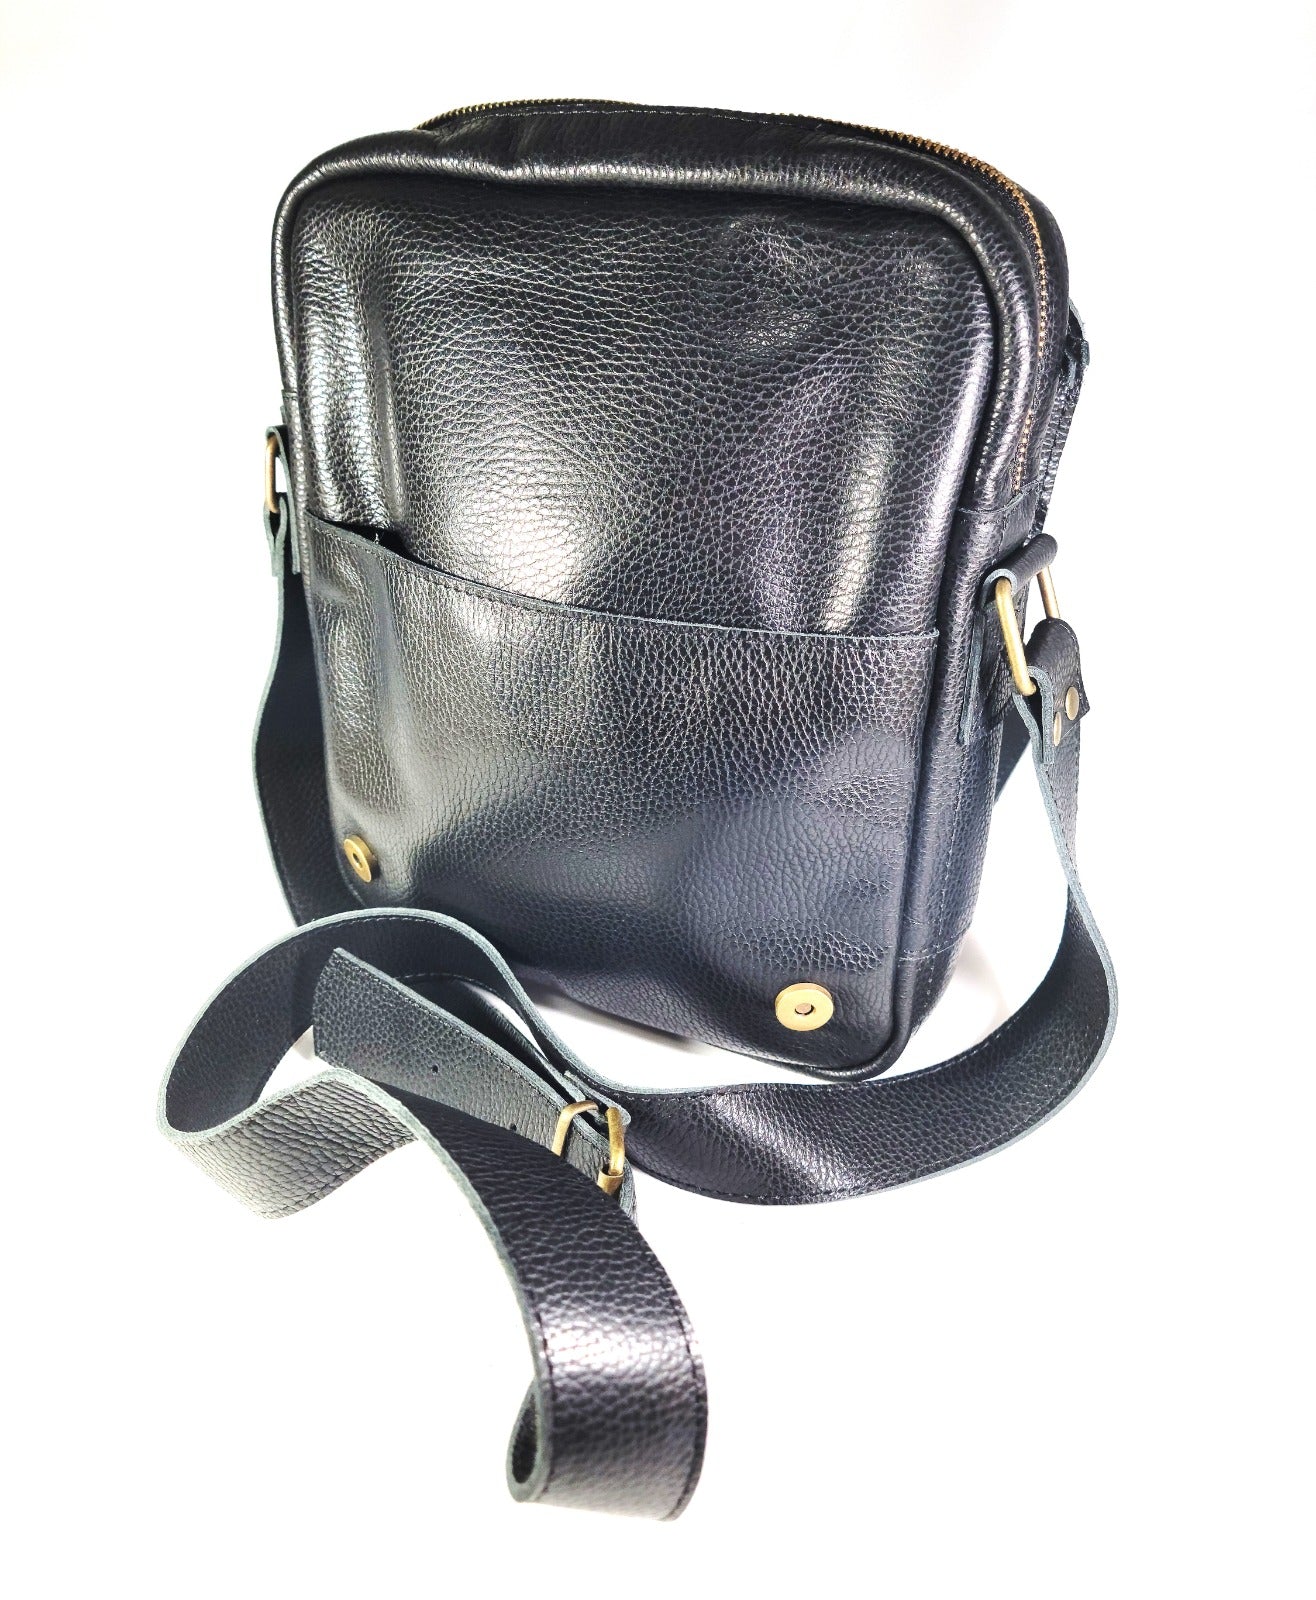 Medium black and brown leather messenger bag.